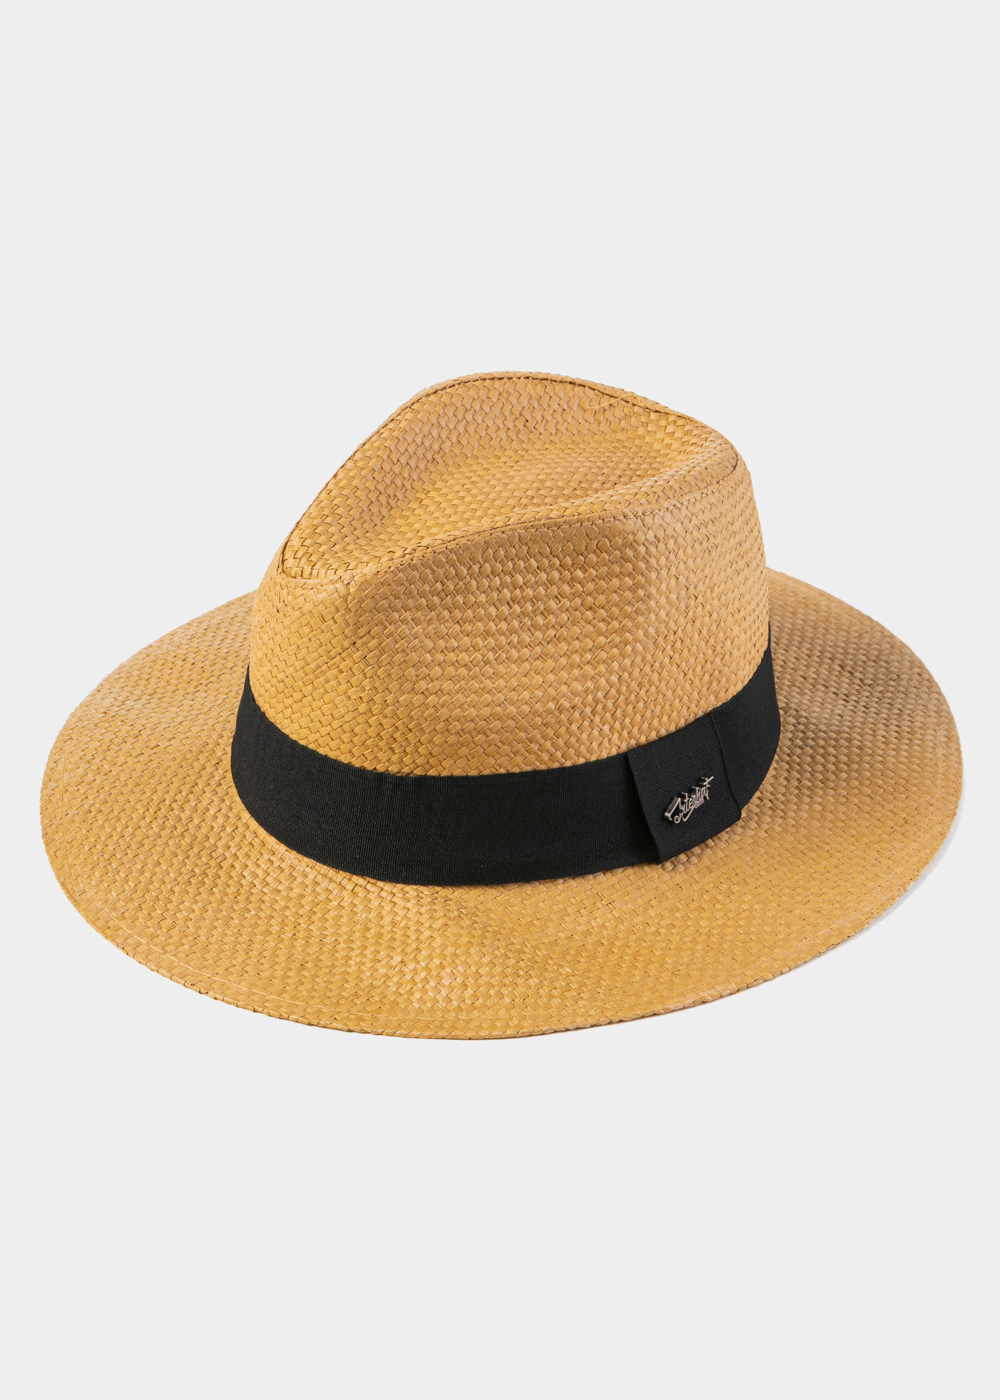 Brown Panama Style Hat 3